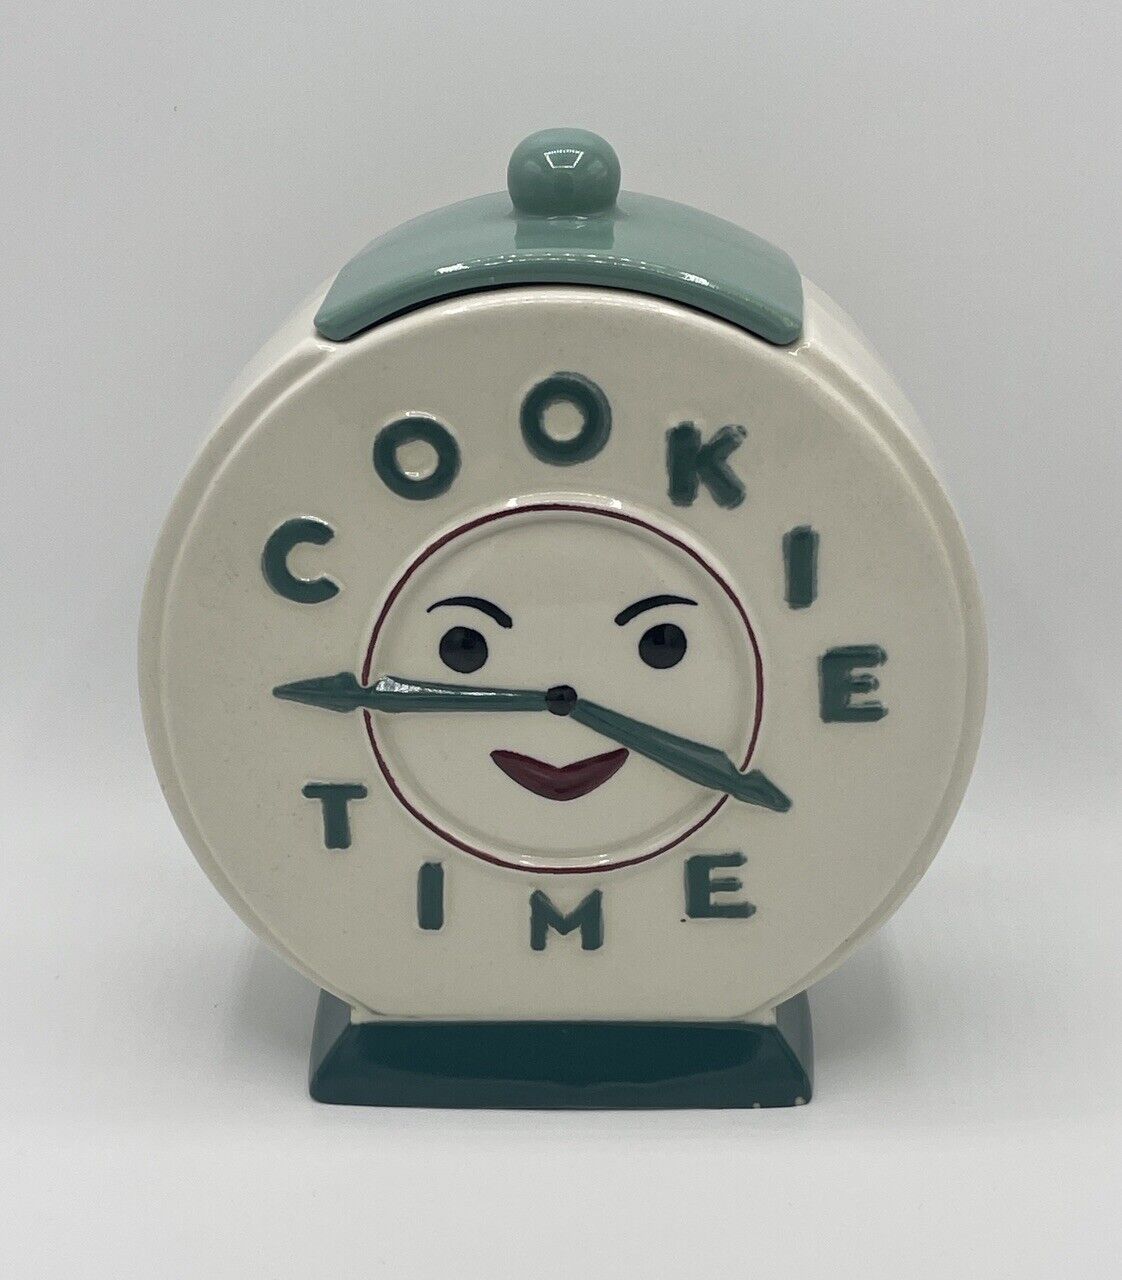 COOKIE TIME cookie jar - Abingdon USA 653 Vintage 1949 Blue Teal Clock Face